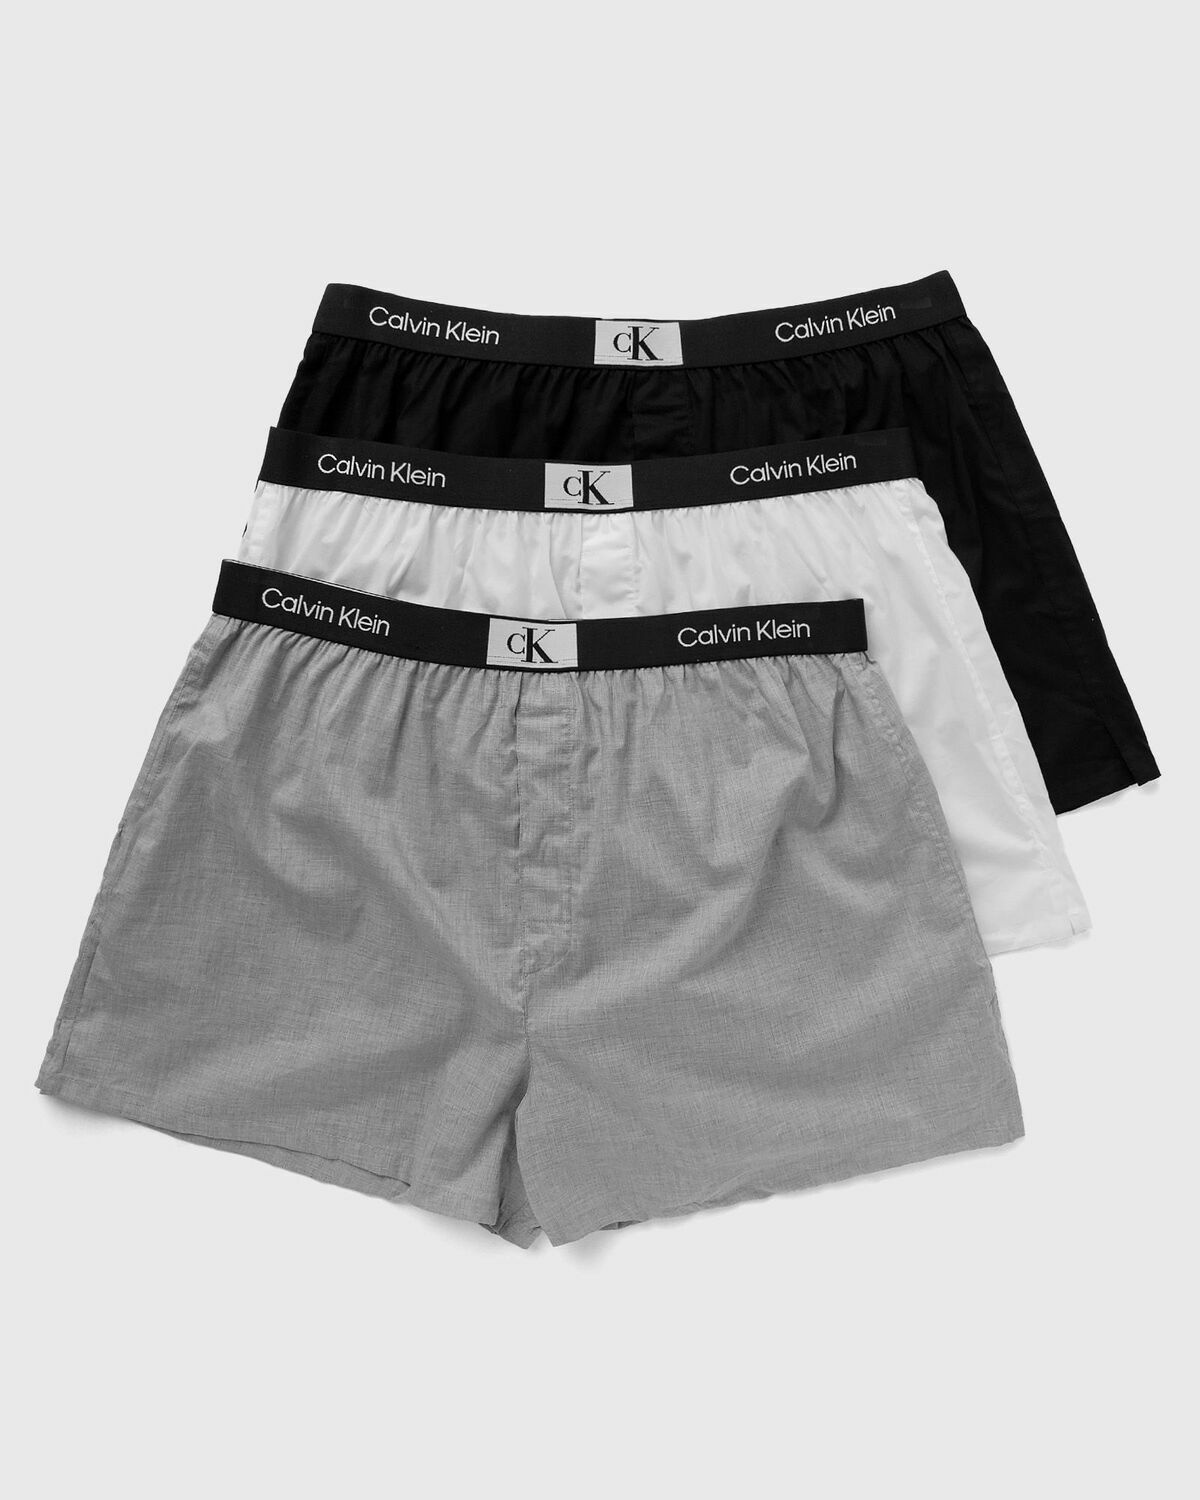 Calvin Klein Underwear 1996 Boxer Slim 3 Pack Multi - Mens - Boxers ...